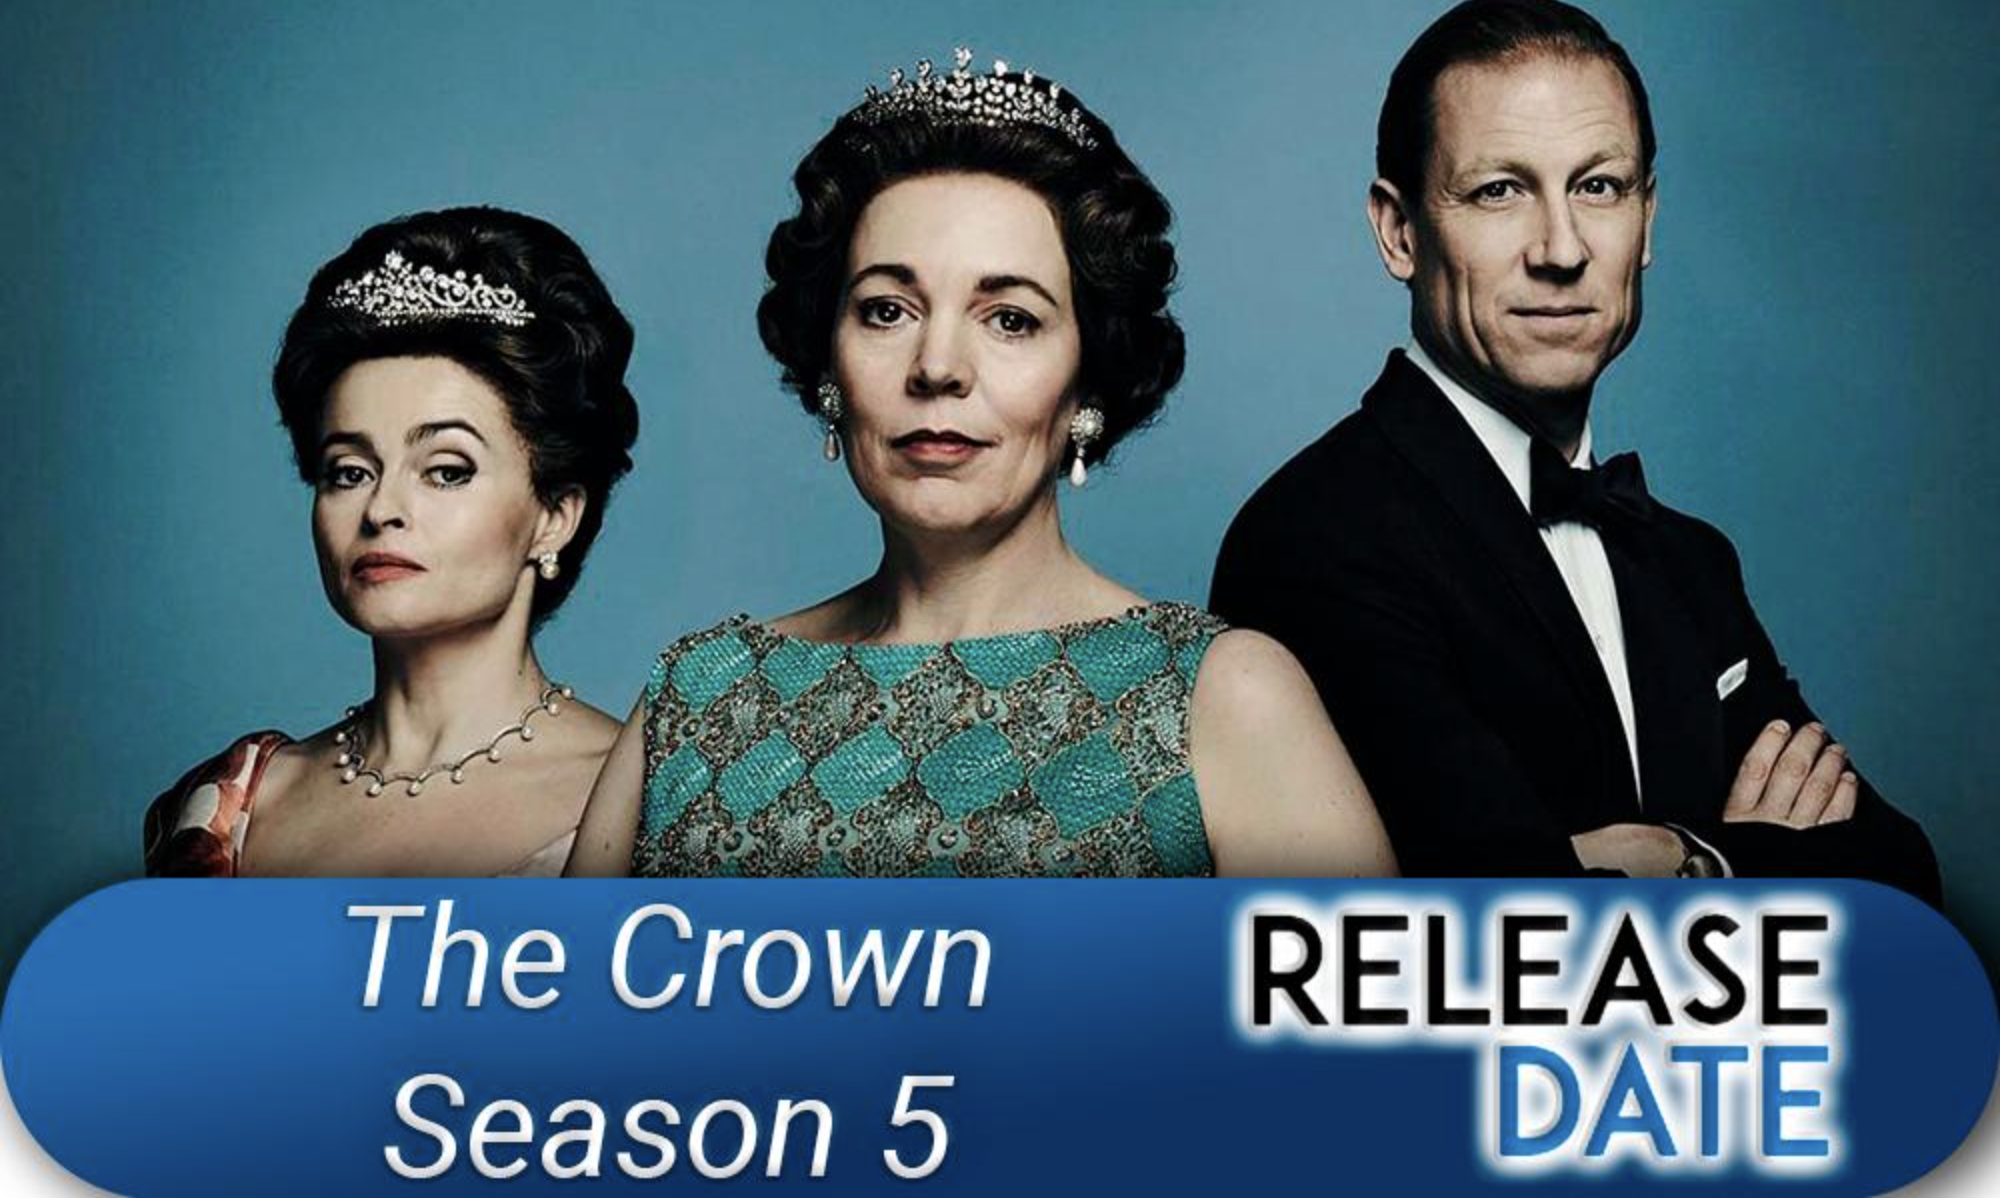 the crown season 5 release date